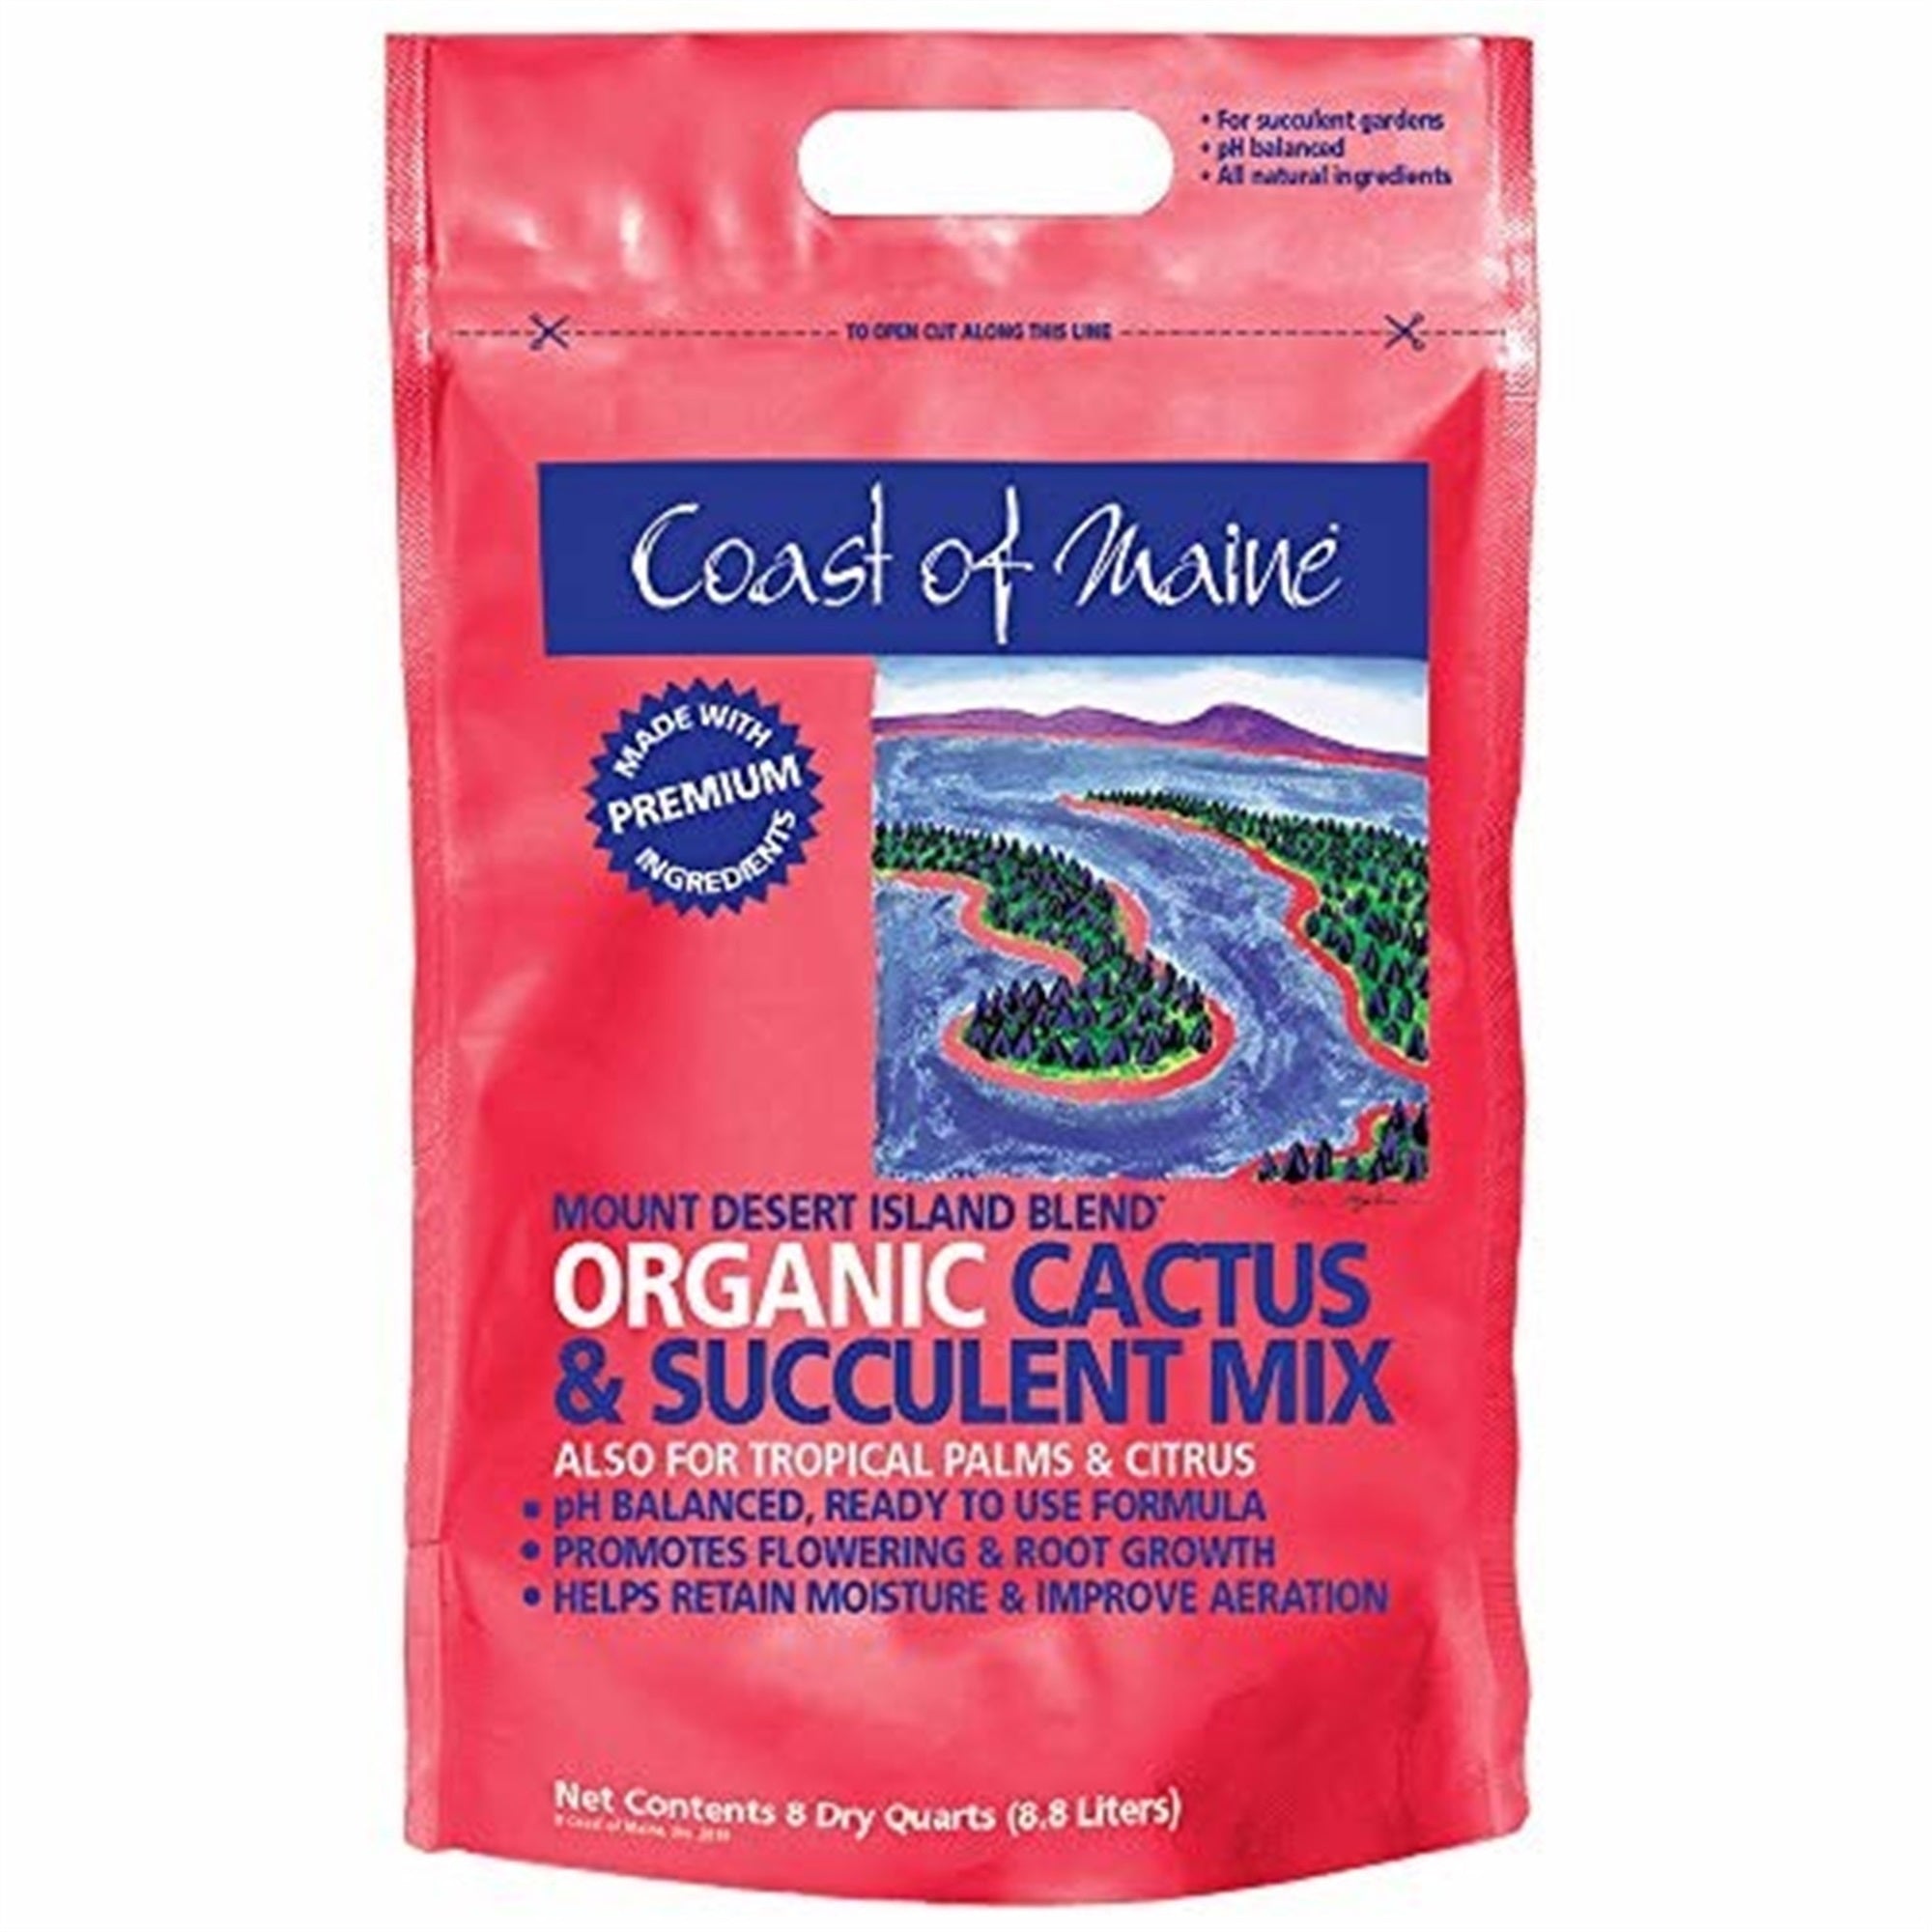 Coast of Maine Mount Desert Island Blend Organic Cactus & Succulent Mix, Tropical Palms & Citrus, 8 QT